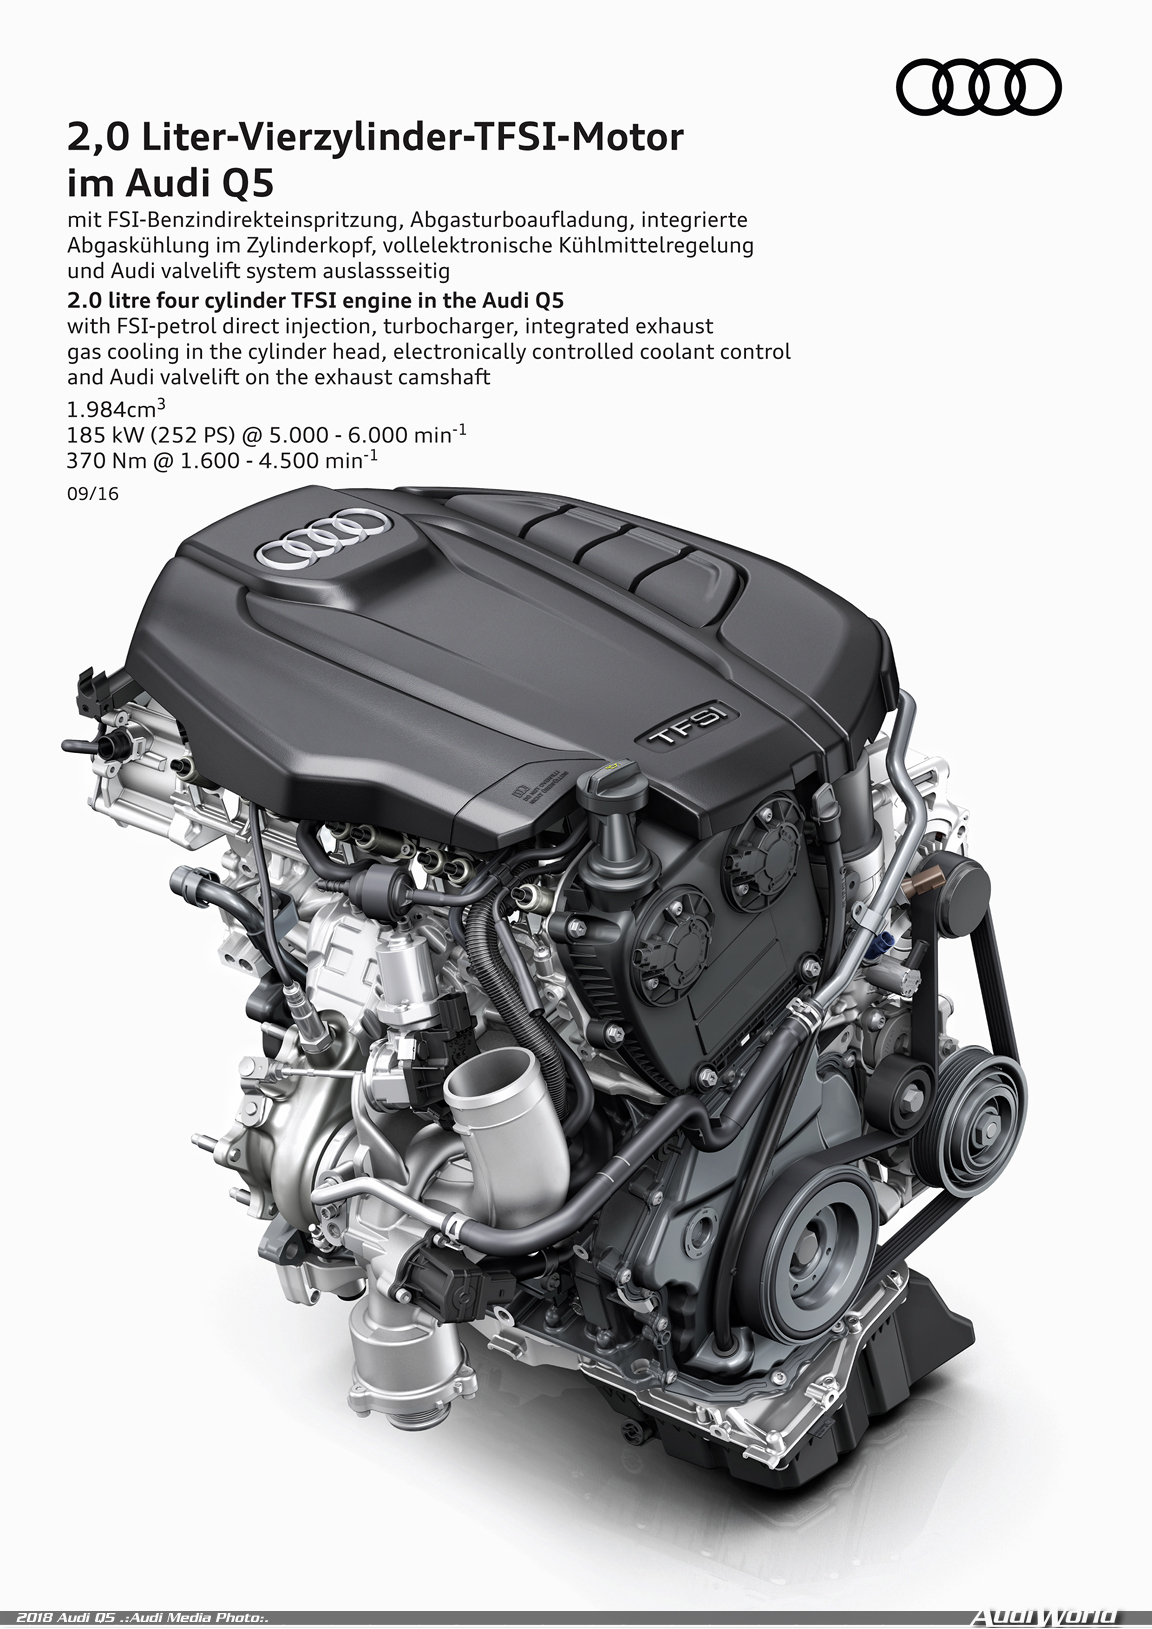 2.0 litre four cylinder TFSI engine in the Audi Q5 - AudiWorld